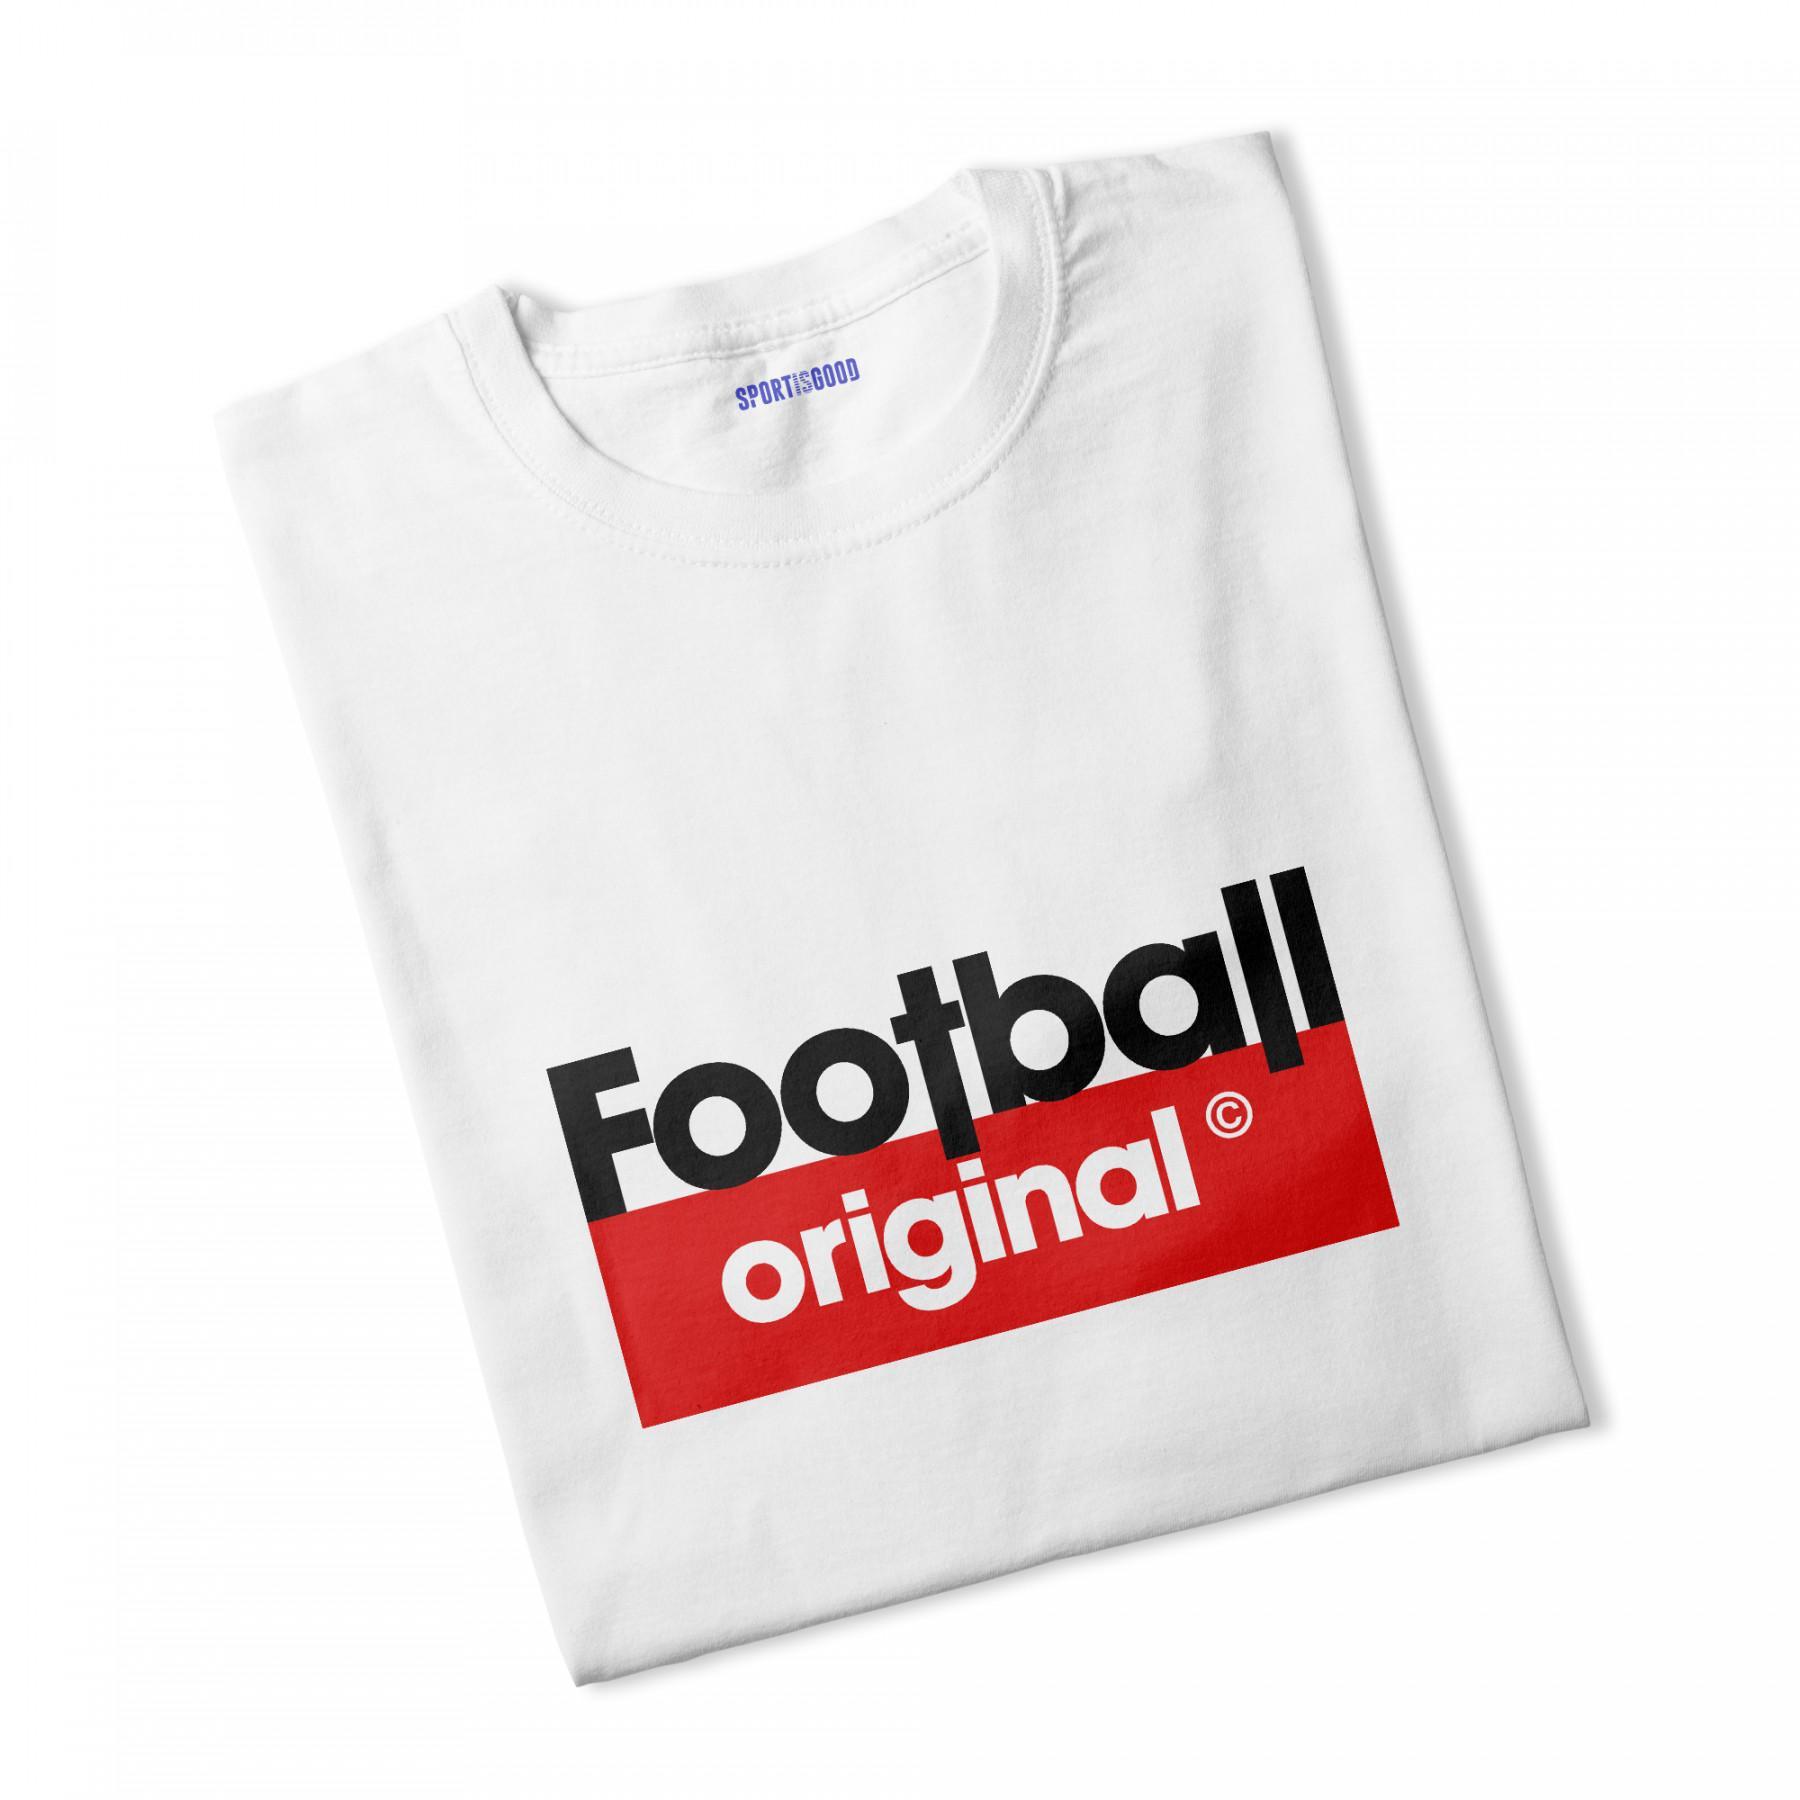 Camiseta Original Football Boy